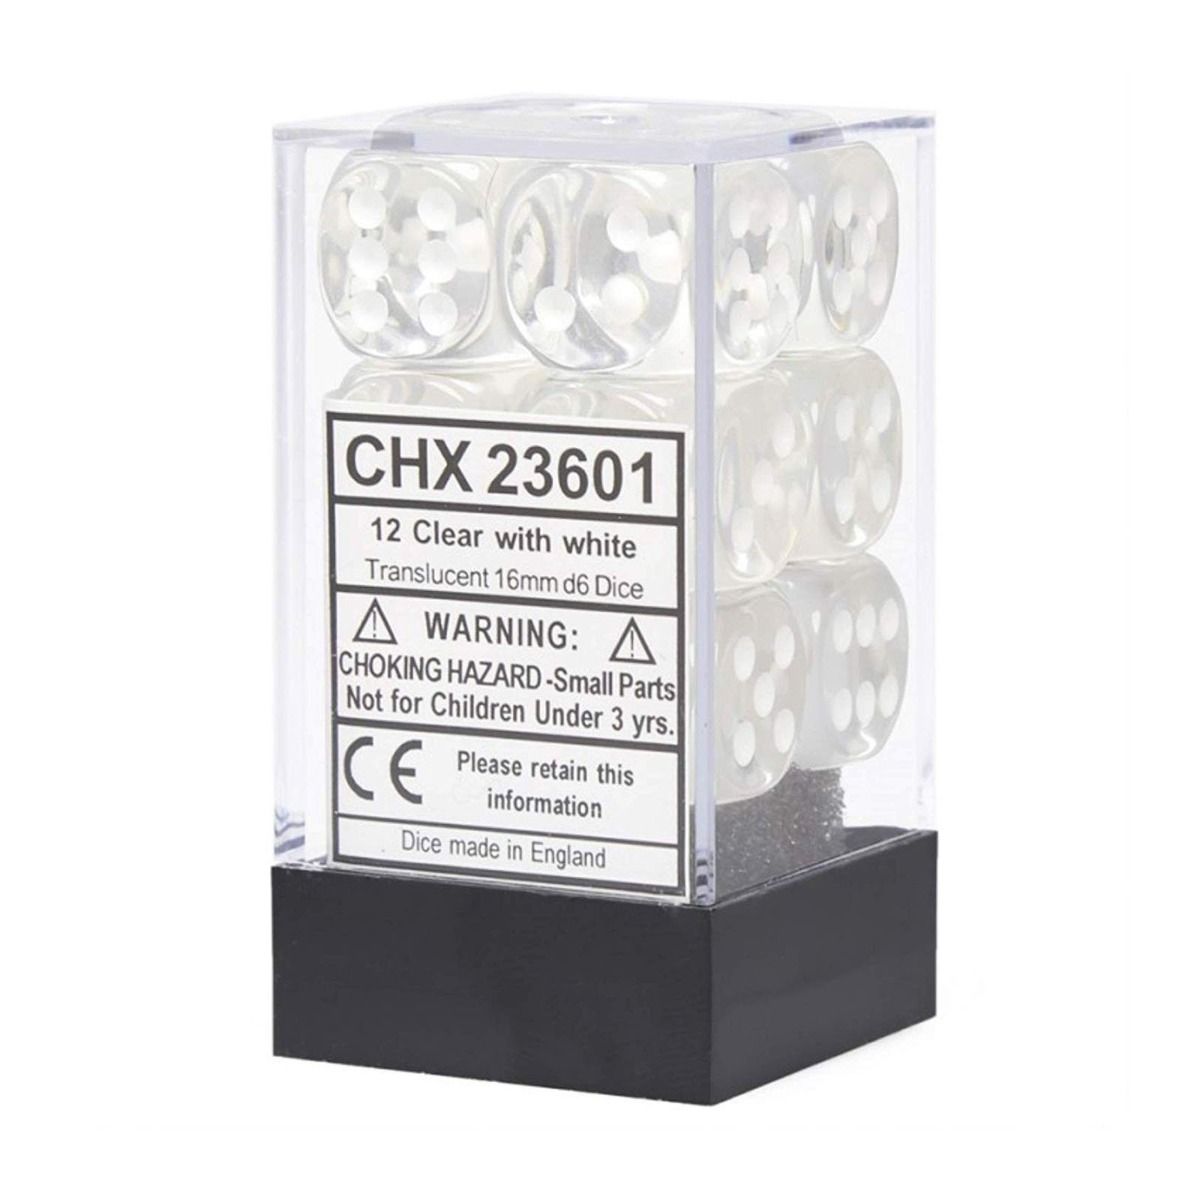 CHX 23601 Translucent 16mm d6 Clear/White Block (12)